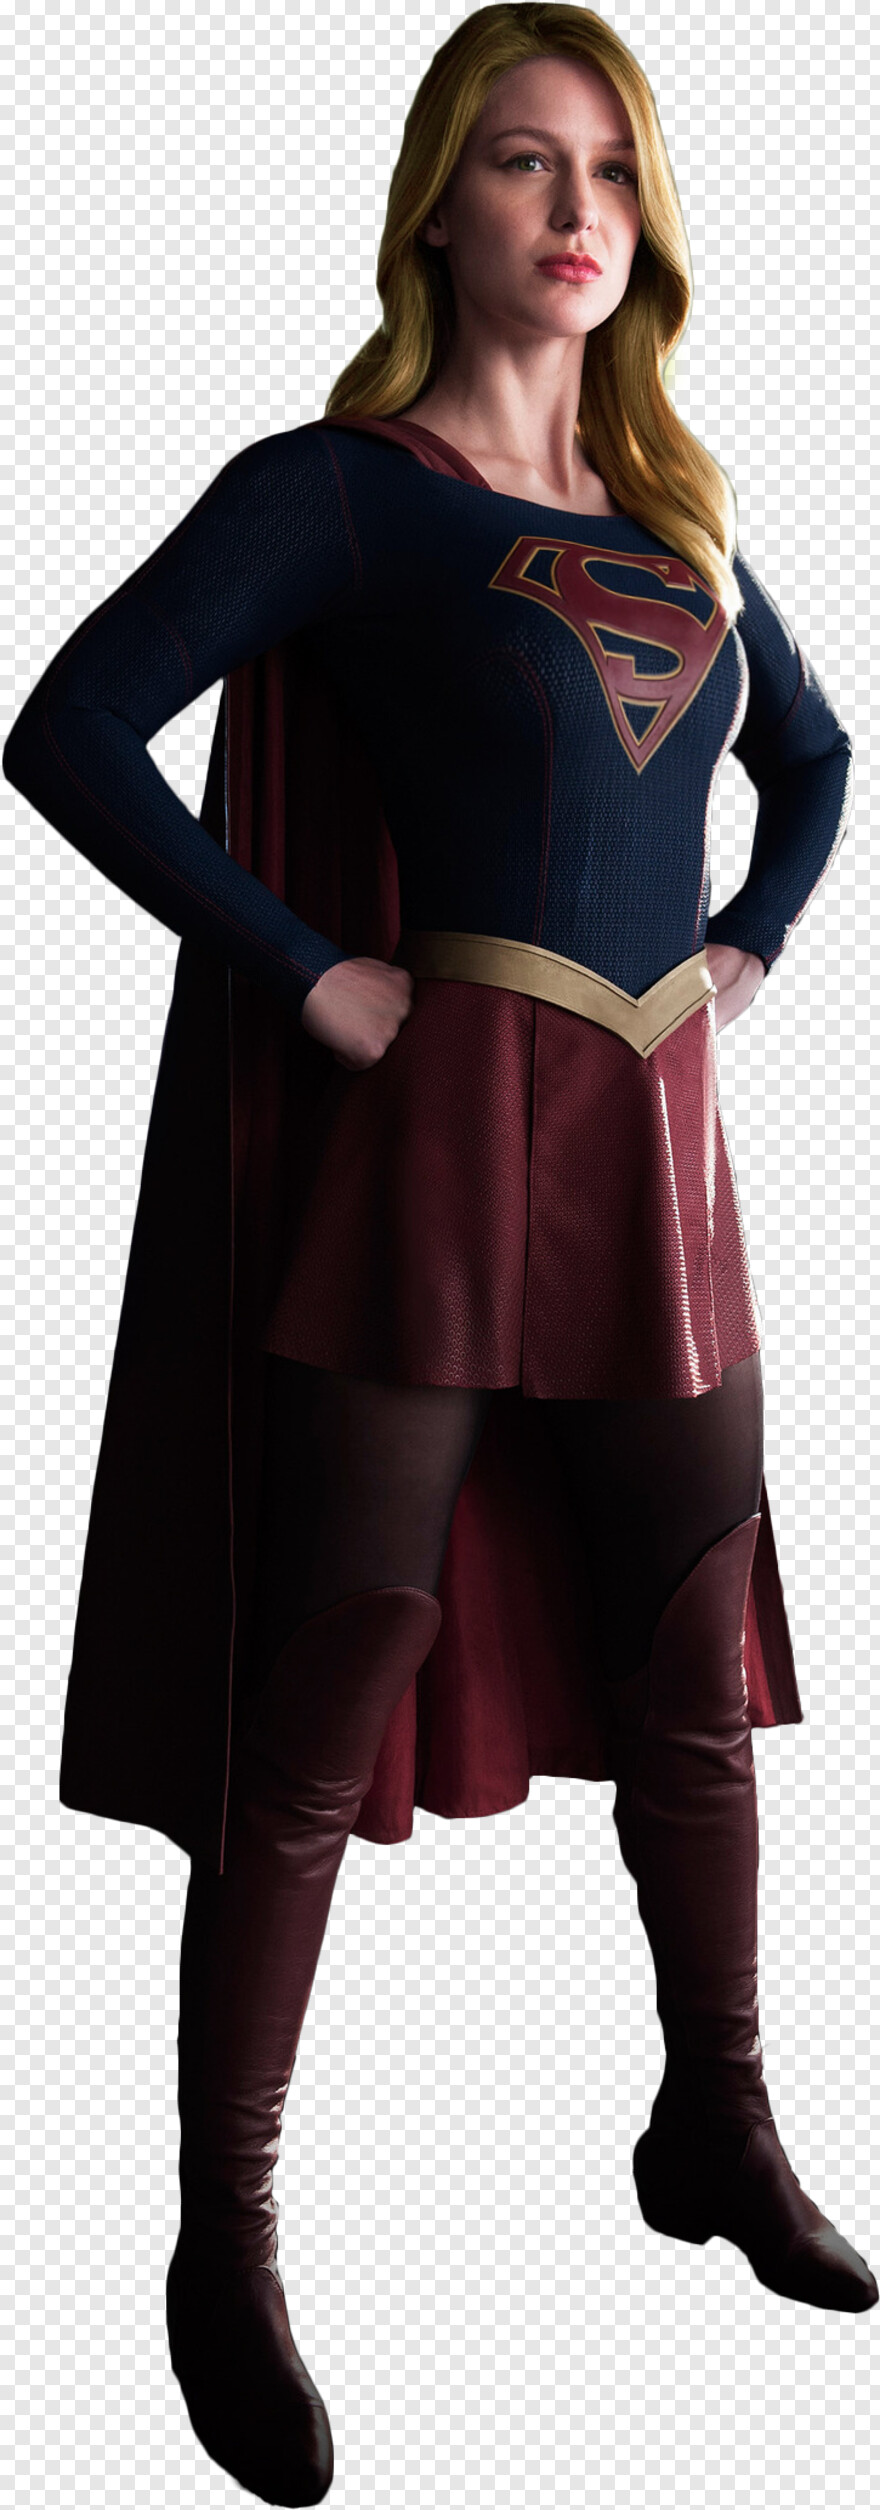 supergirl-logo # 563759